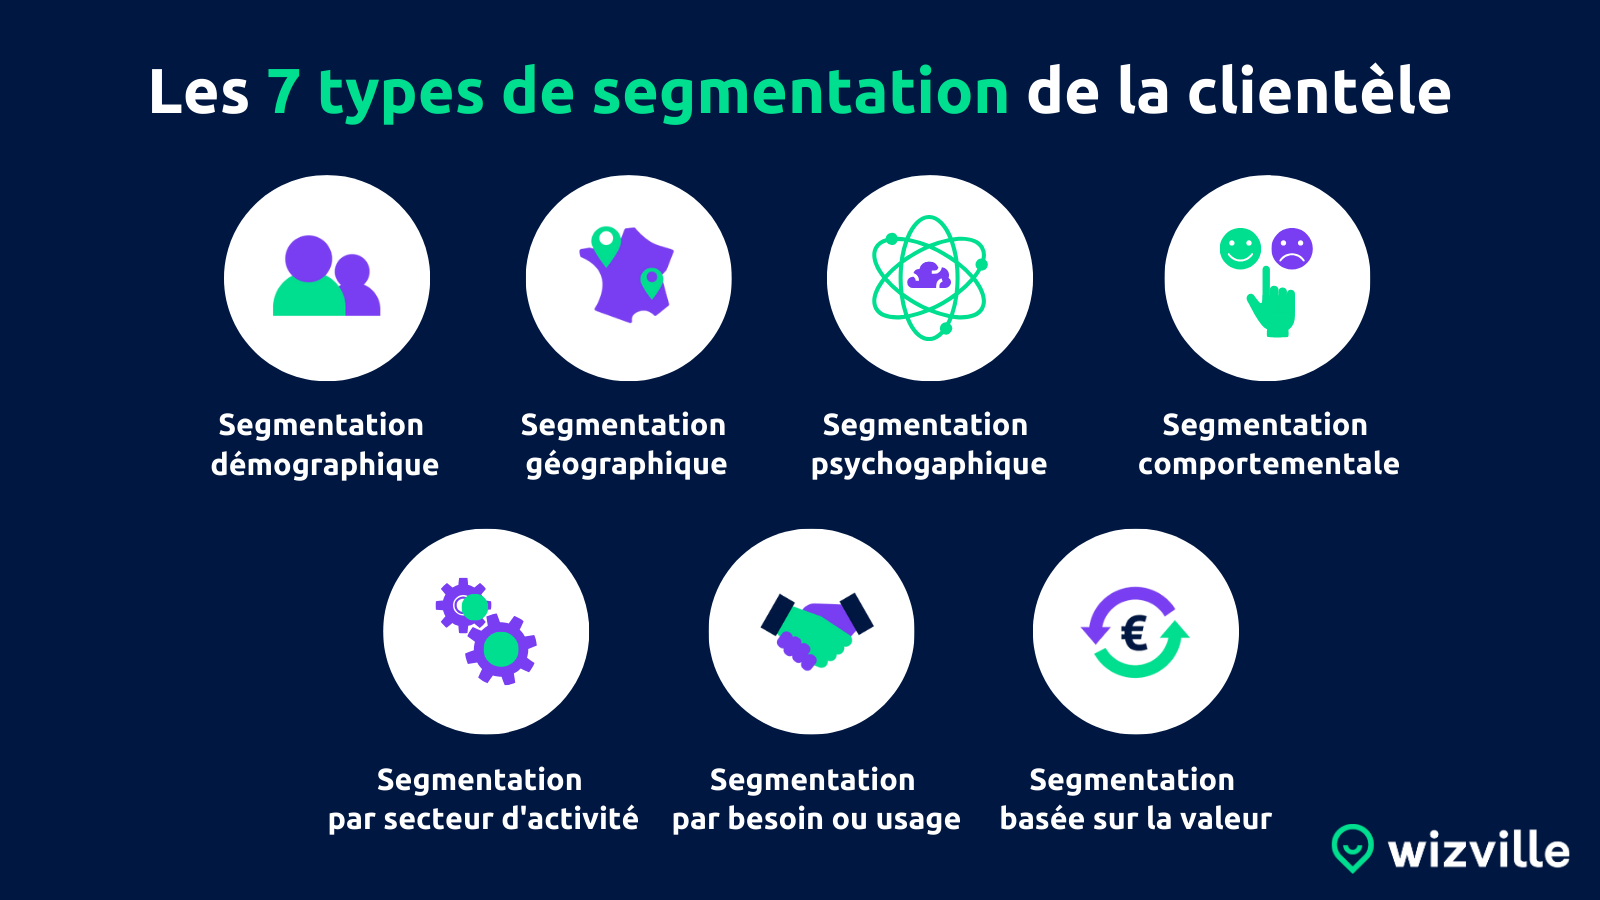 segmentation-client